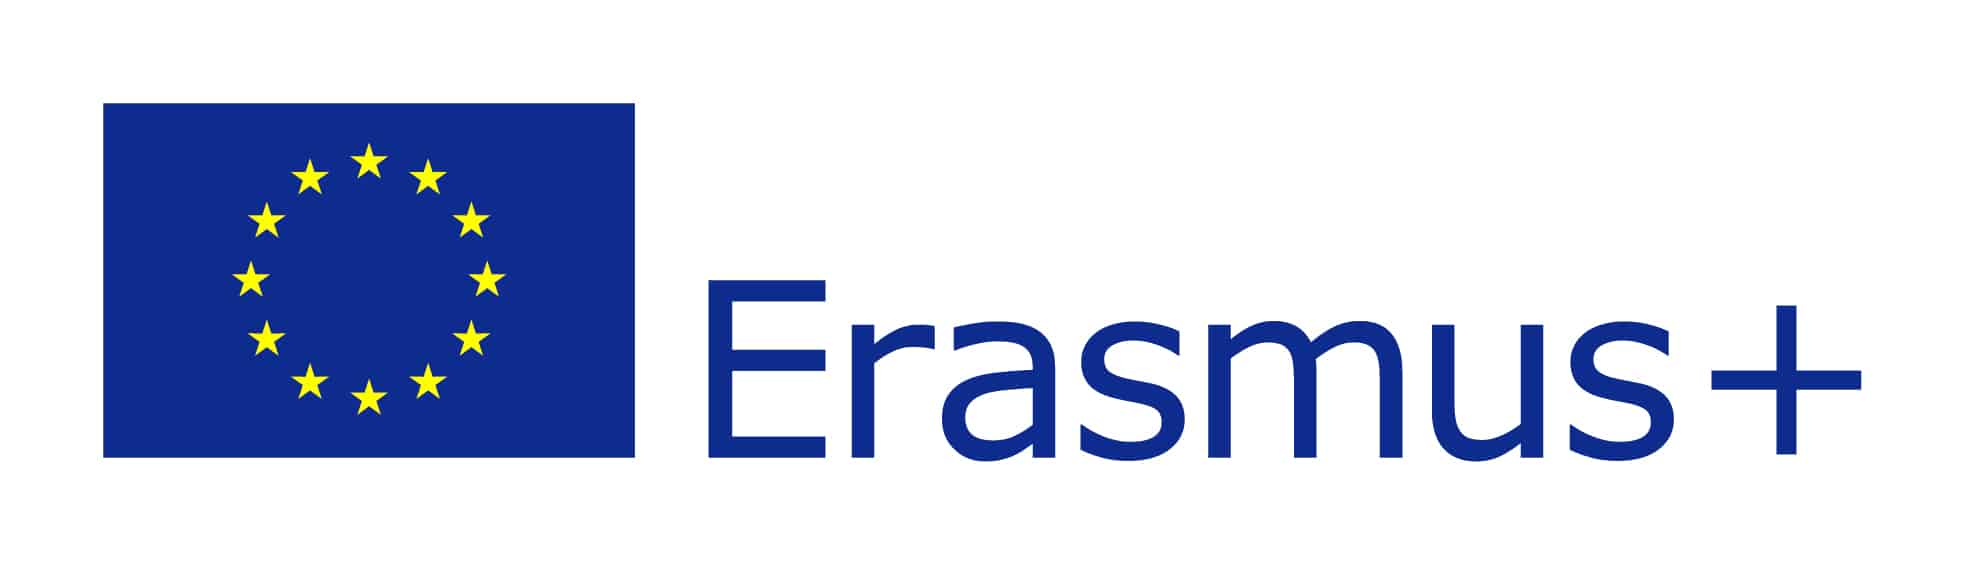 EU-flag-Erasmus_vect_POS